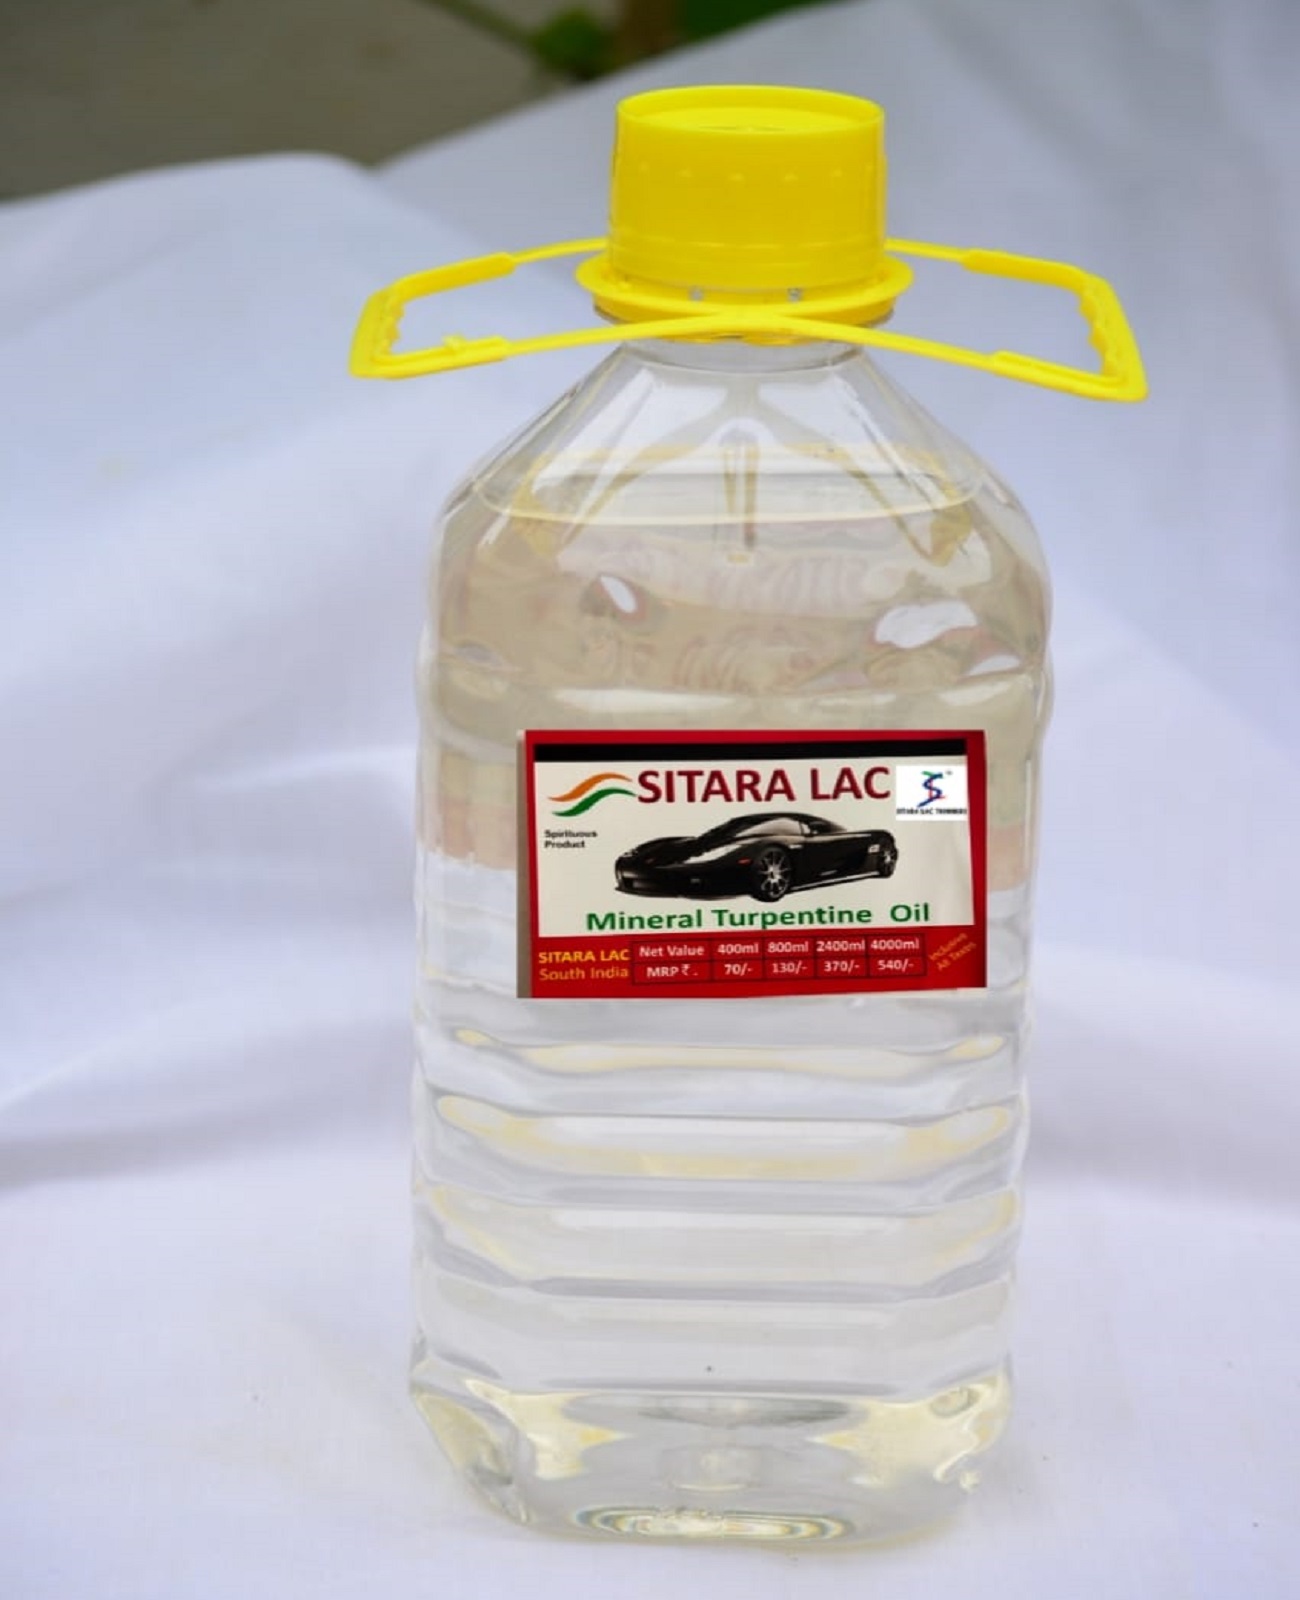 Sitara Lac Mineral Turpentine Oil